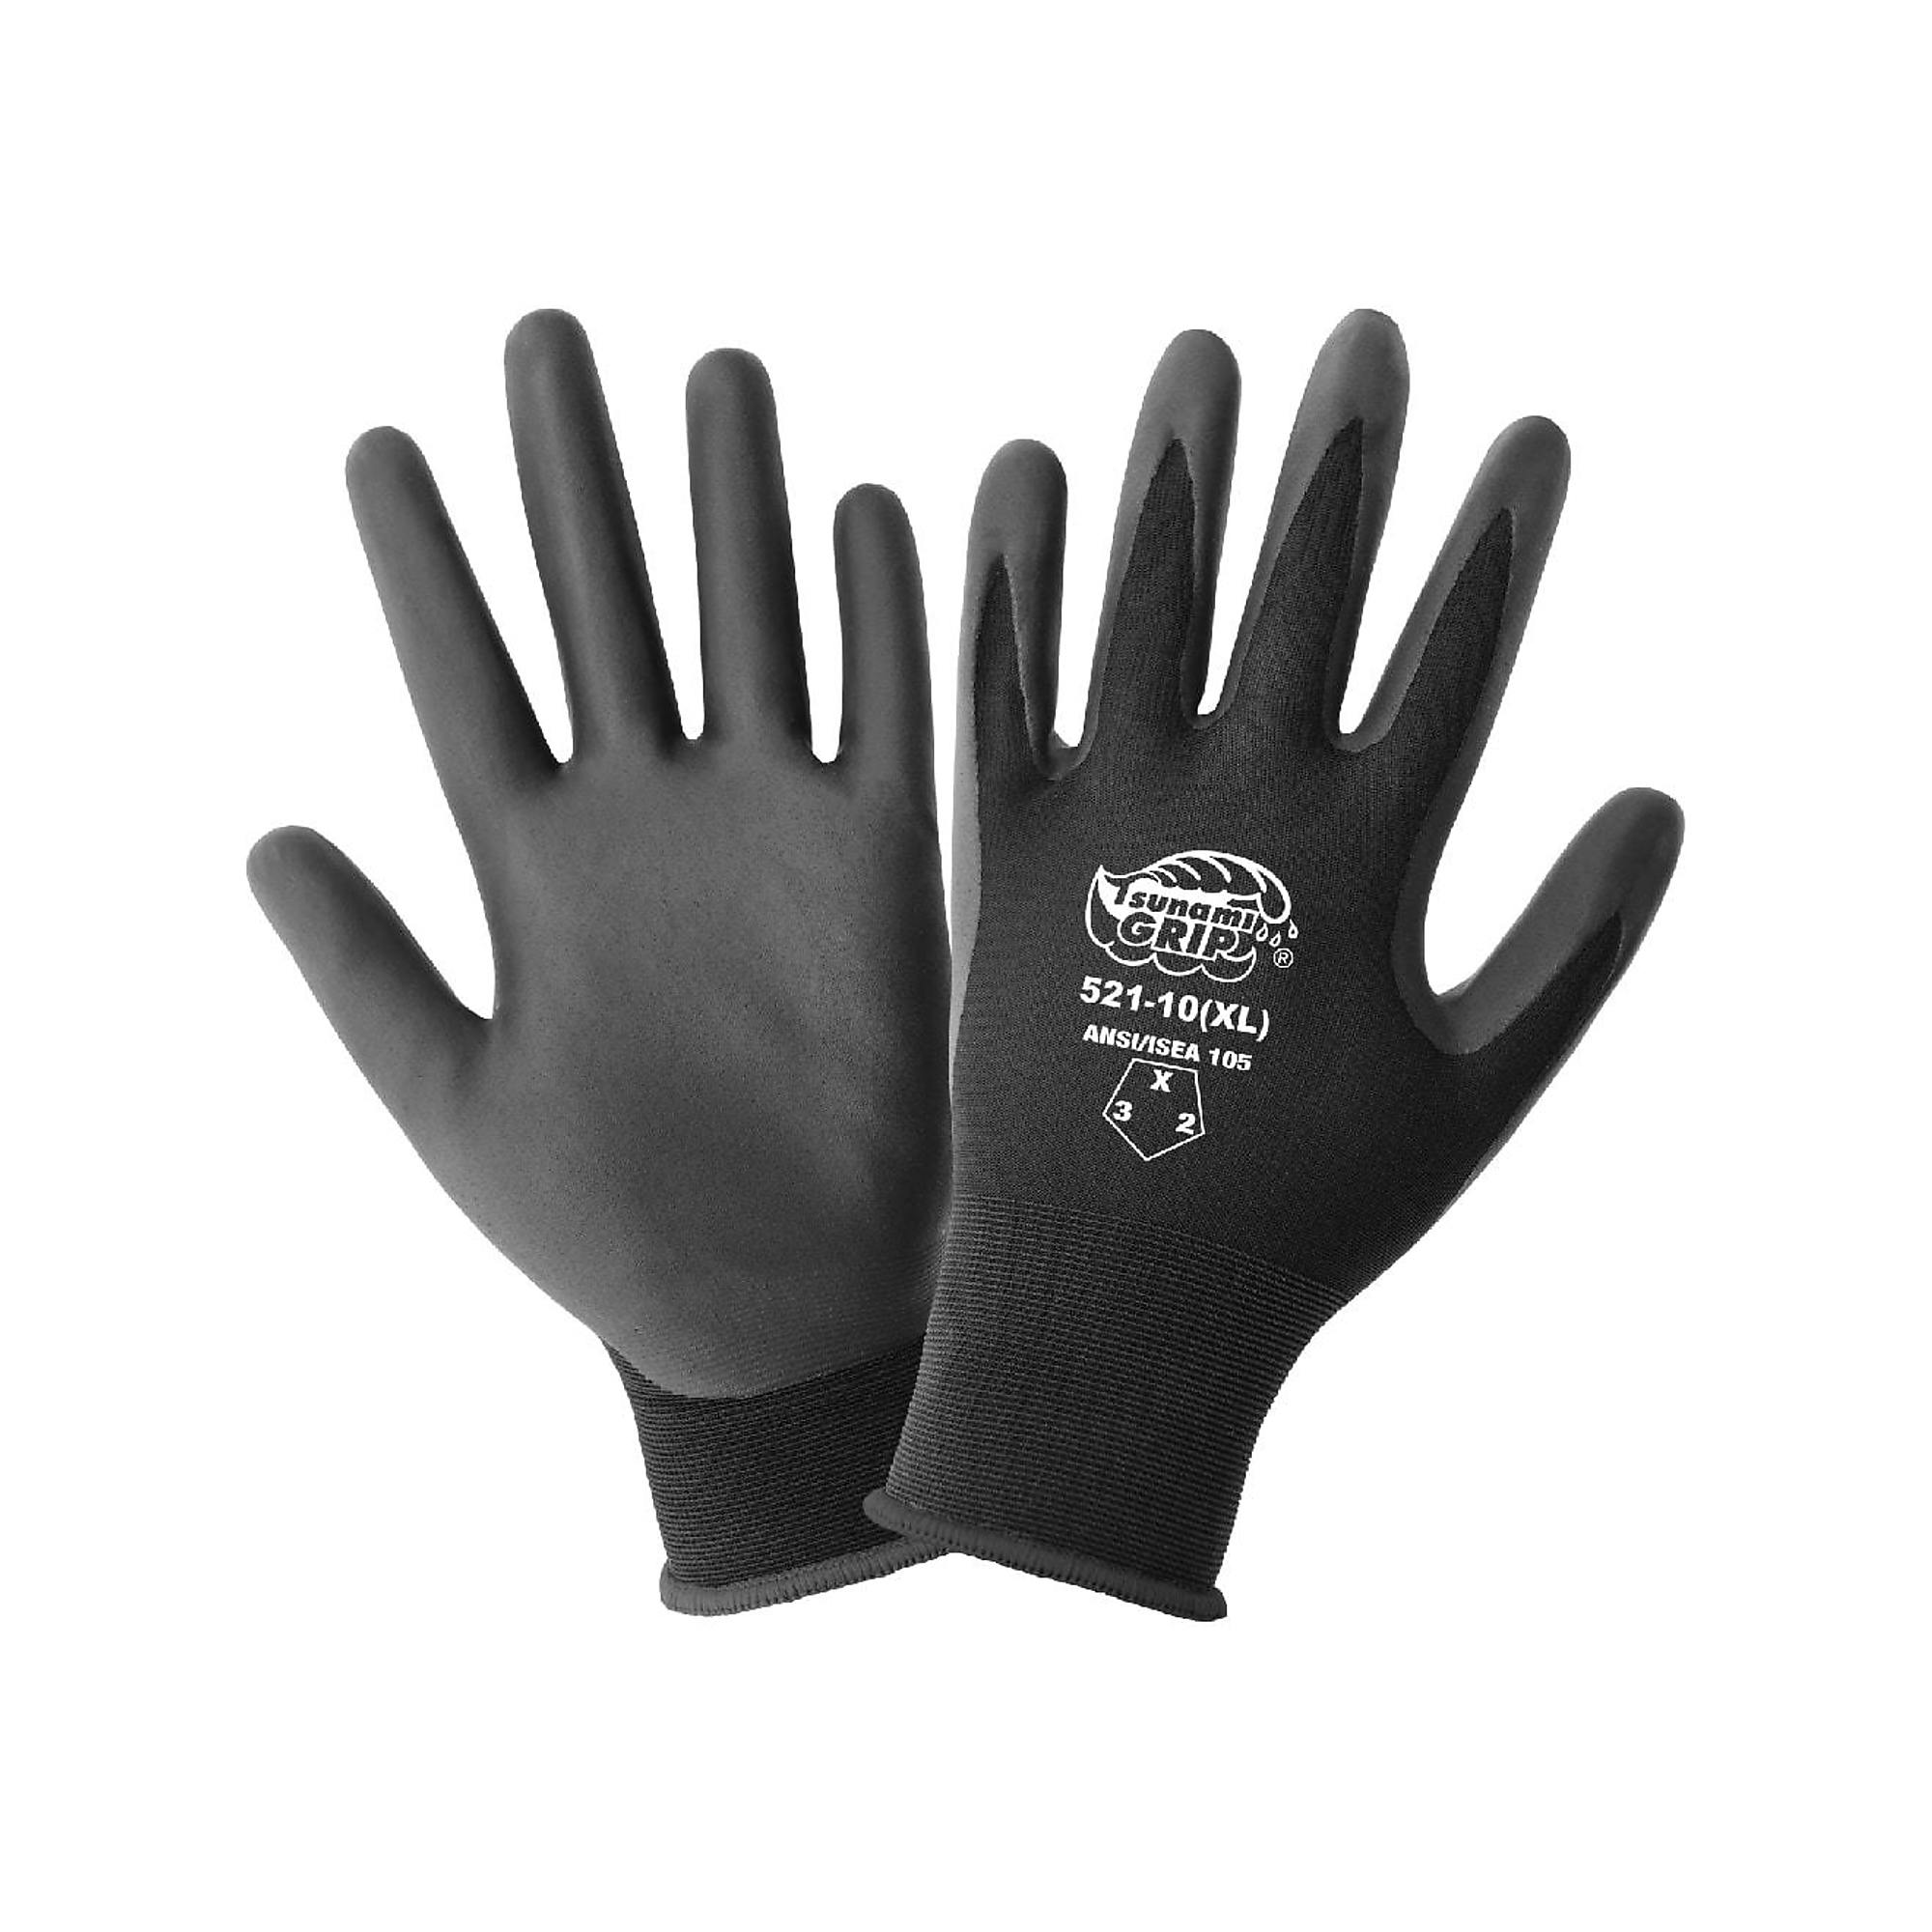 Global Glove Tsunami Grip , Tsunami Grip FDA Nitrile Coated 21-Gauge Gloves - 12 Pairs, Size M, Color Black, Included (qty.) 12 Model 521-8(M)